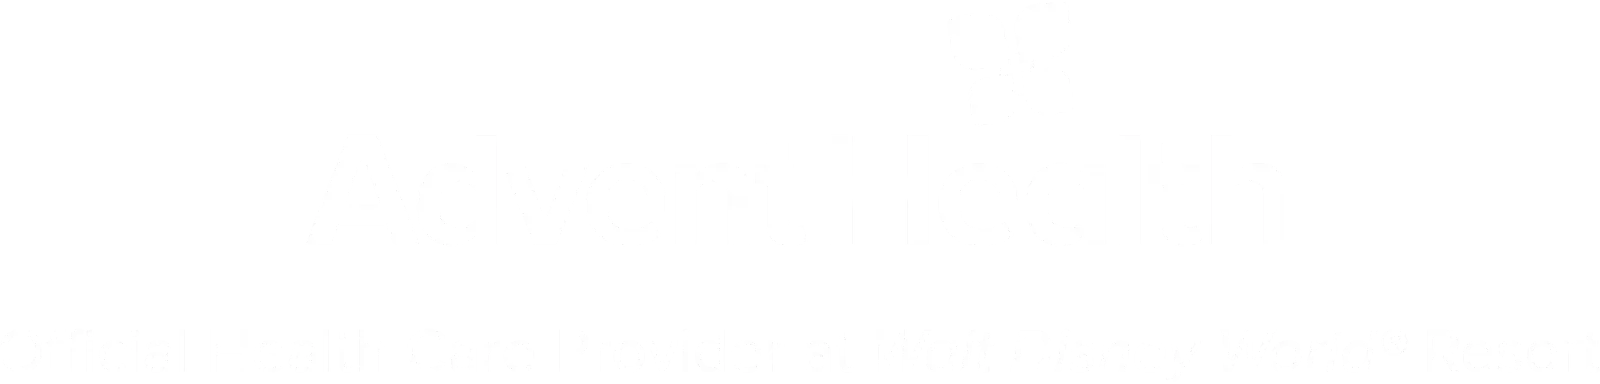 AdventHealth, Official Health Care Provider at Walt Disney World Resort